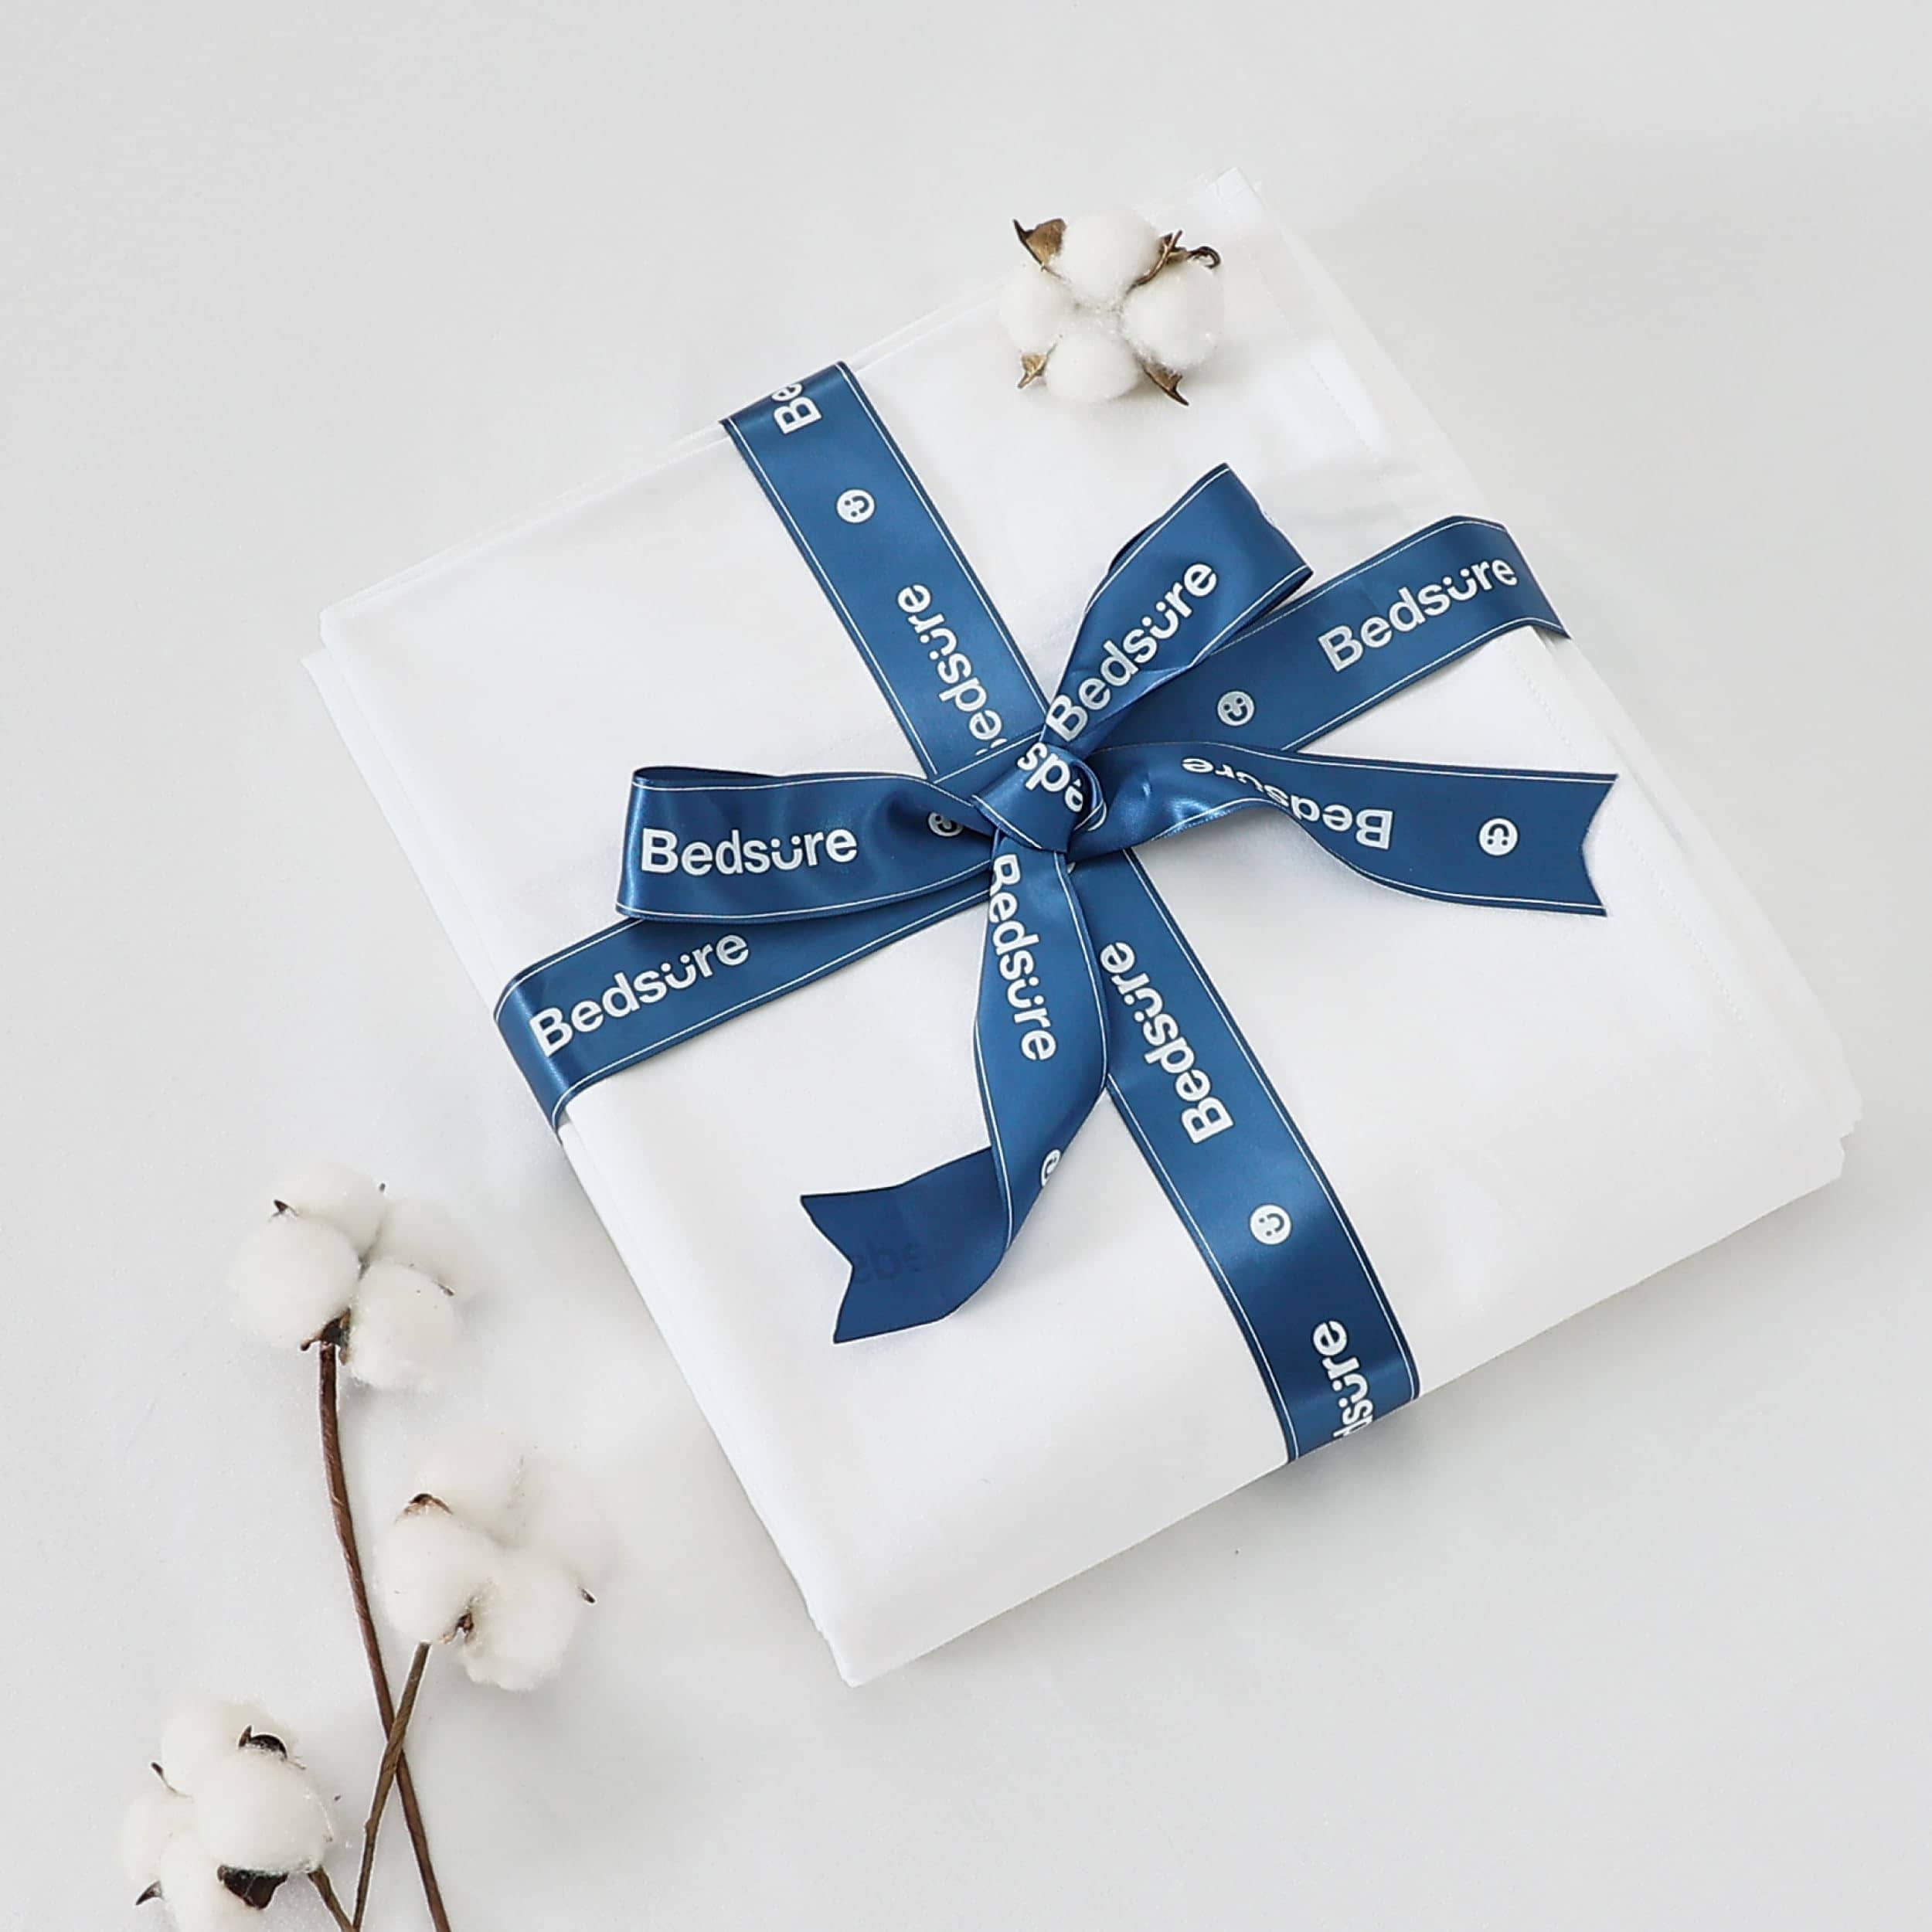 100% Cotton Solid Flannel Sheet Set